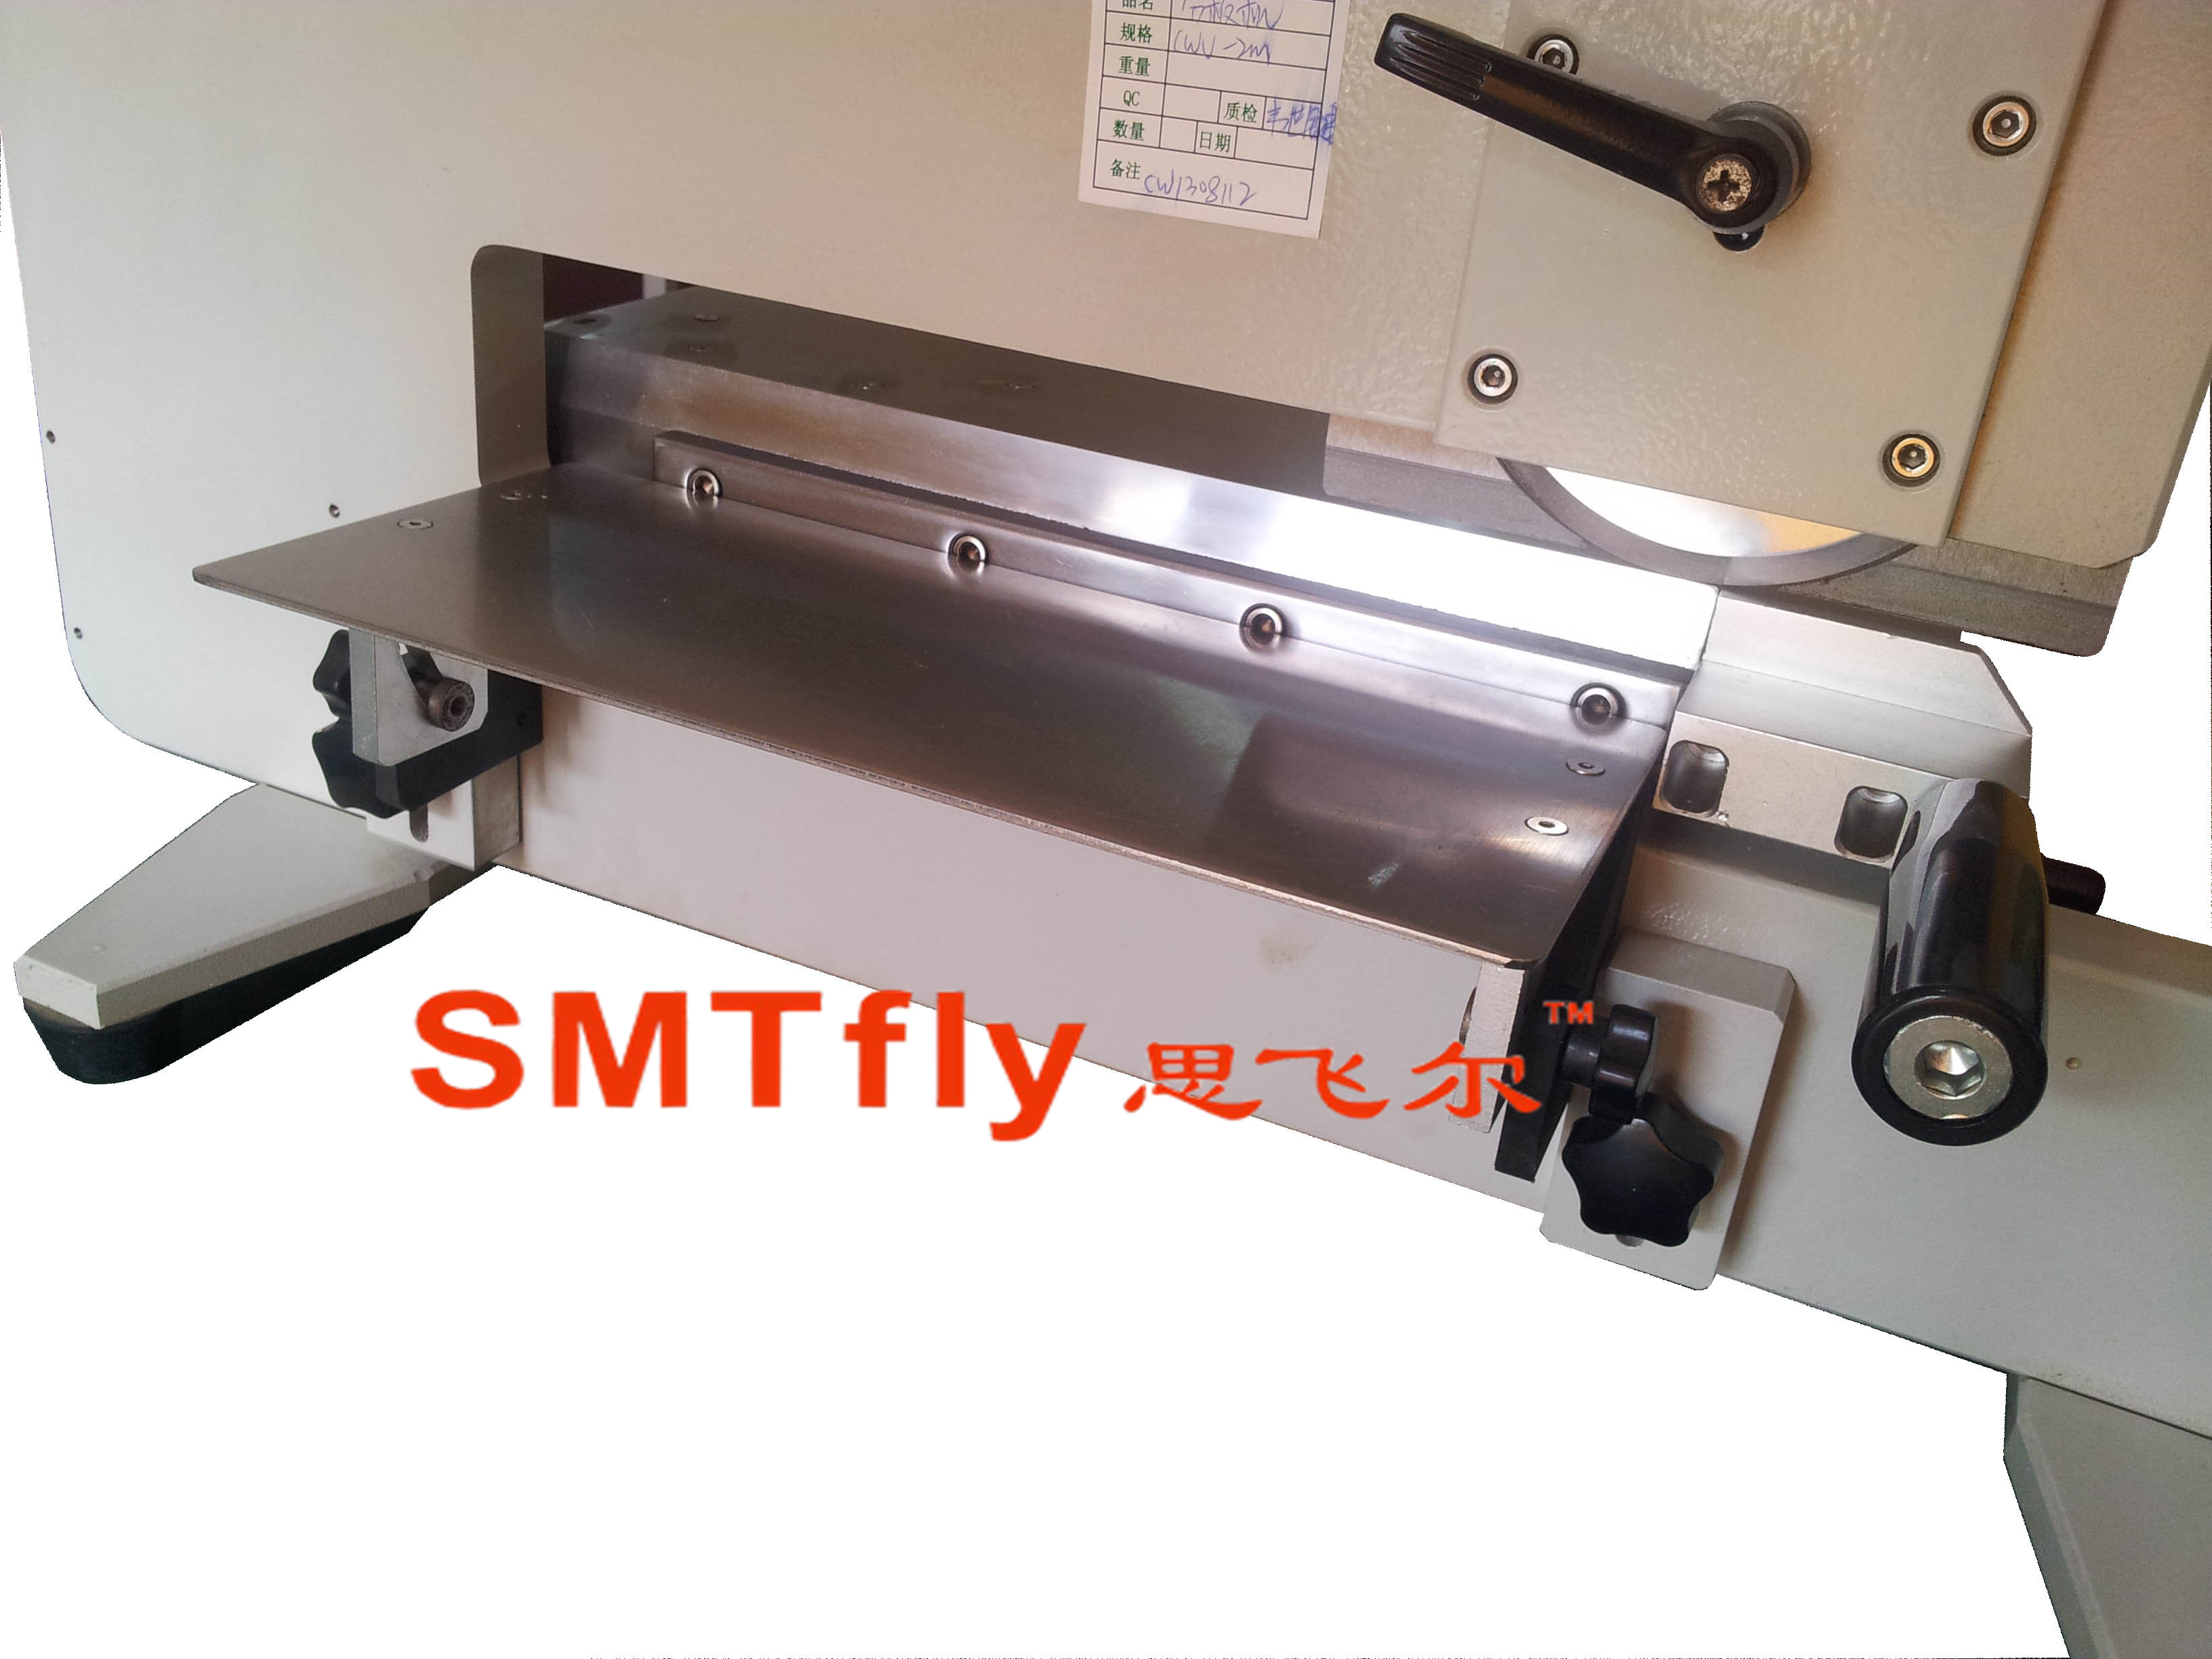 PCB Manual Cutting Machine,SMTfly-2M